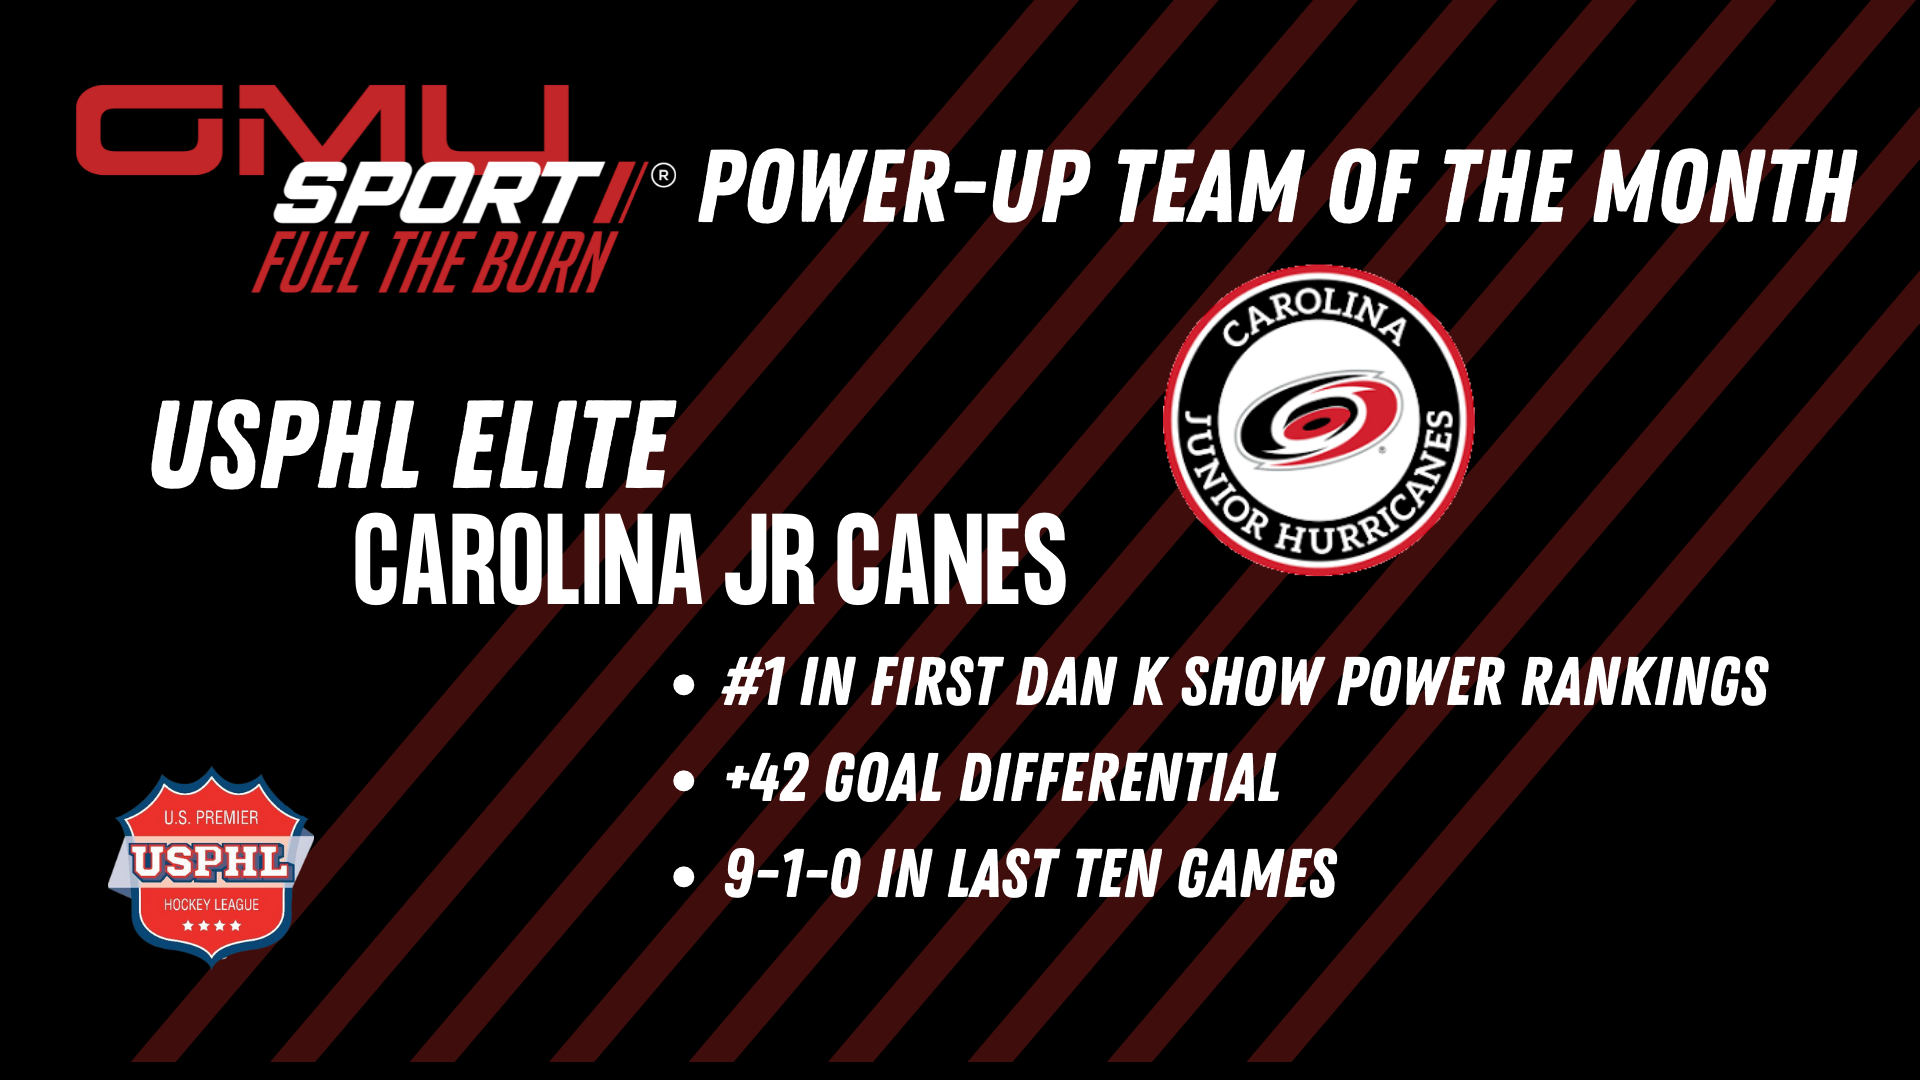 The Dan K Show, USPHL Present GMU Sport Power-Up Teams Of The Month; Carolina Wins USPHL Elite Award